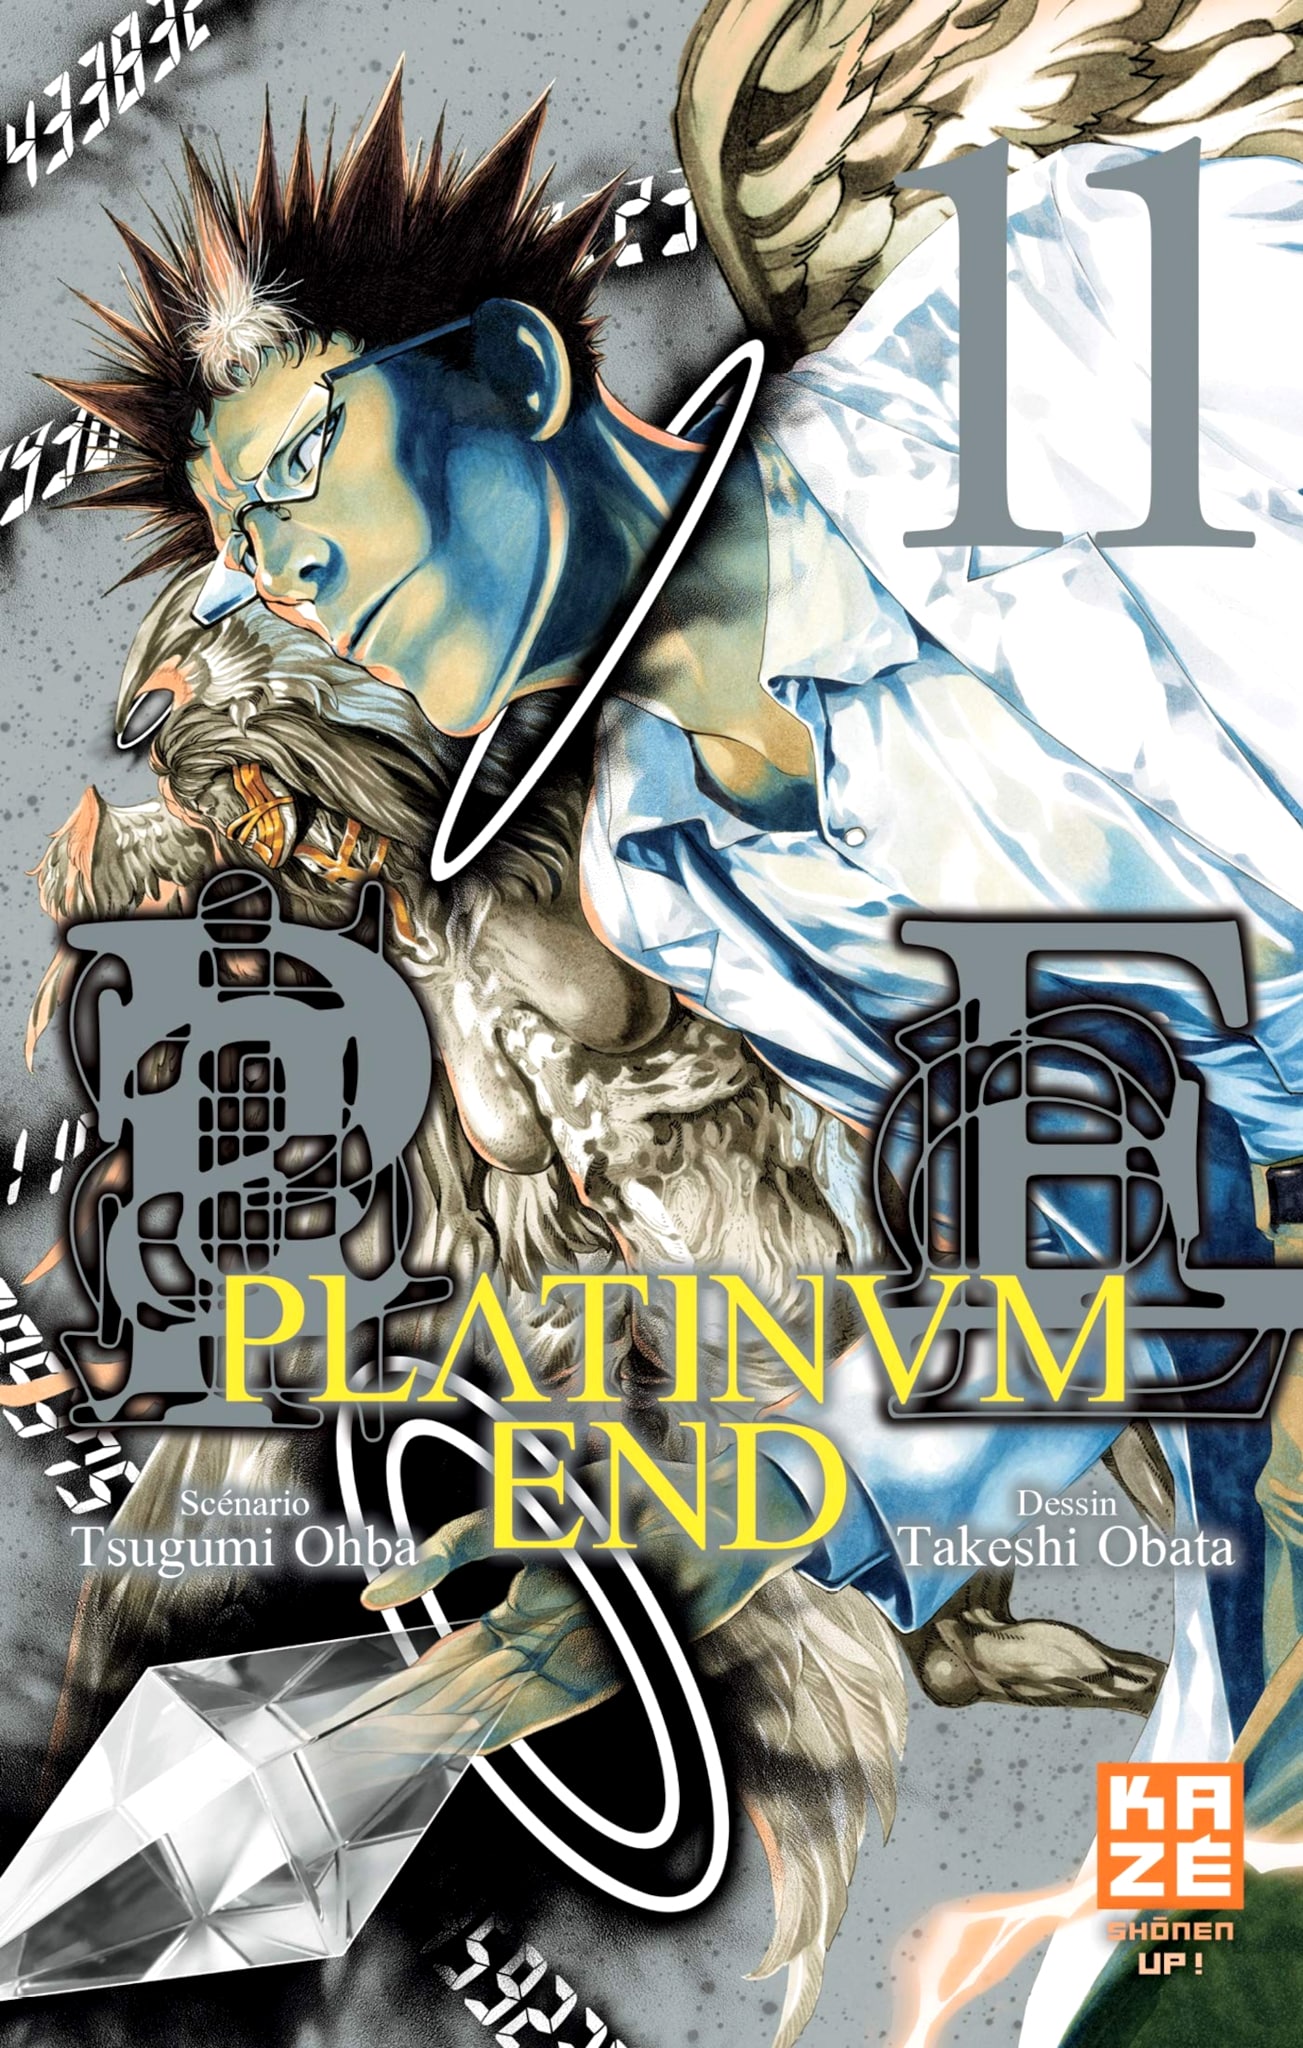 Tome 11 du manga Platinum End